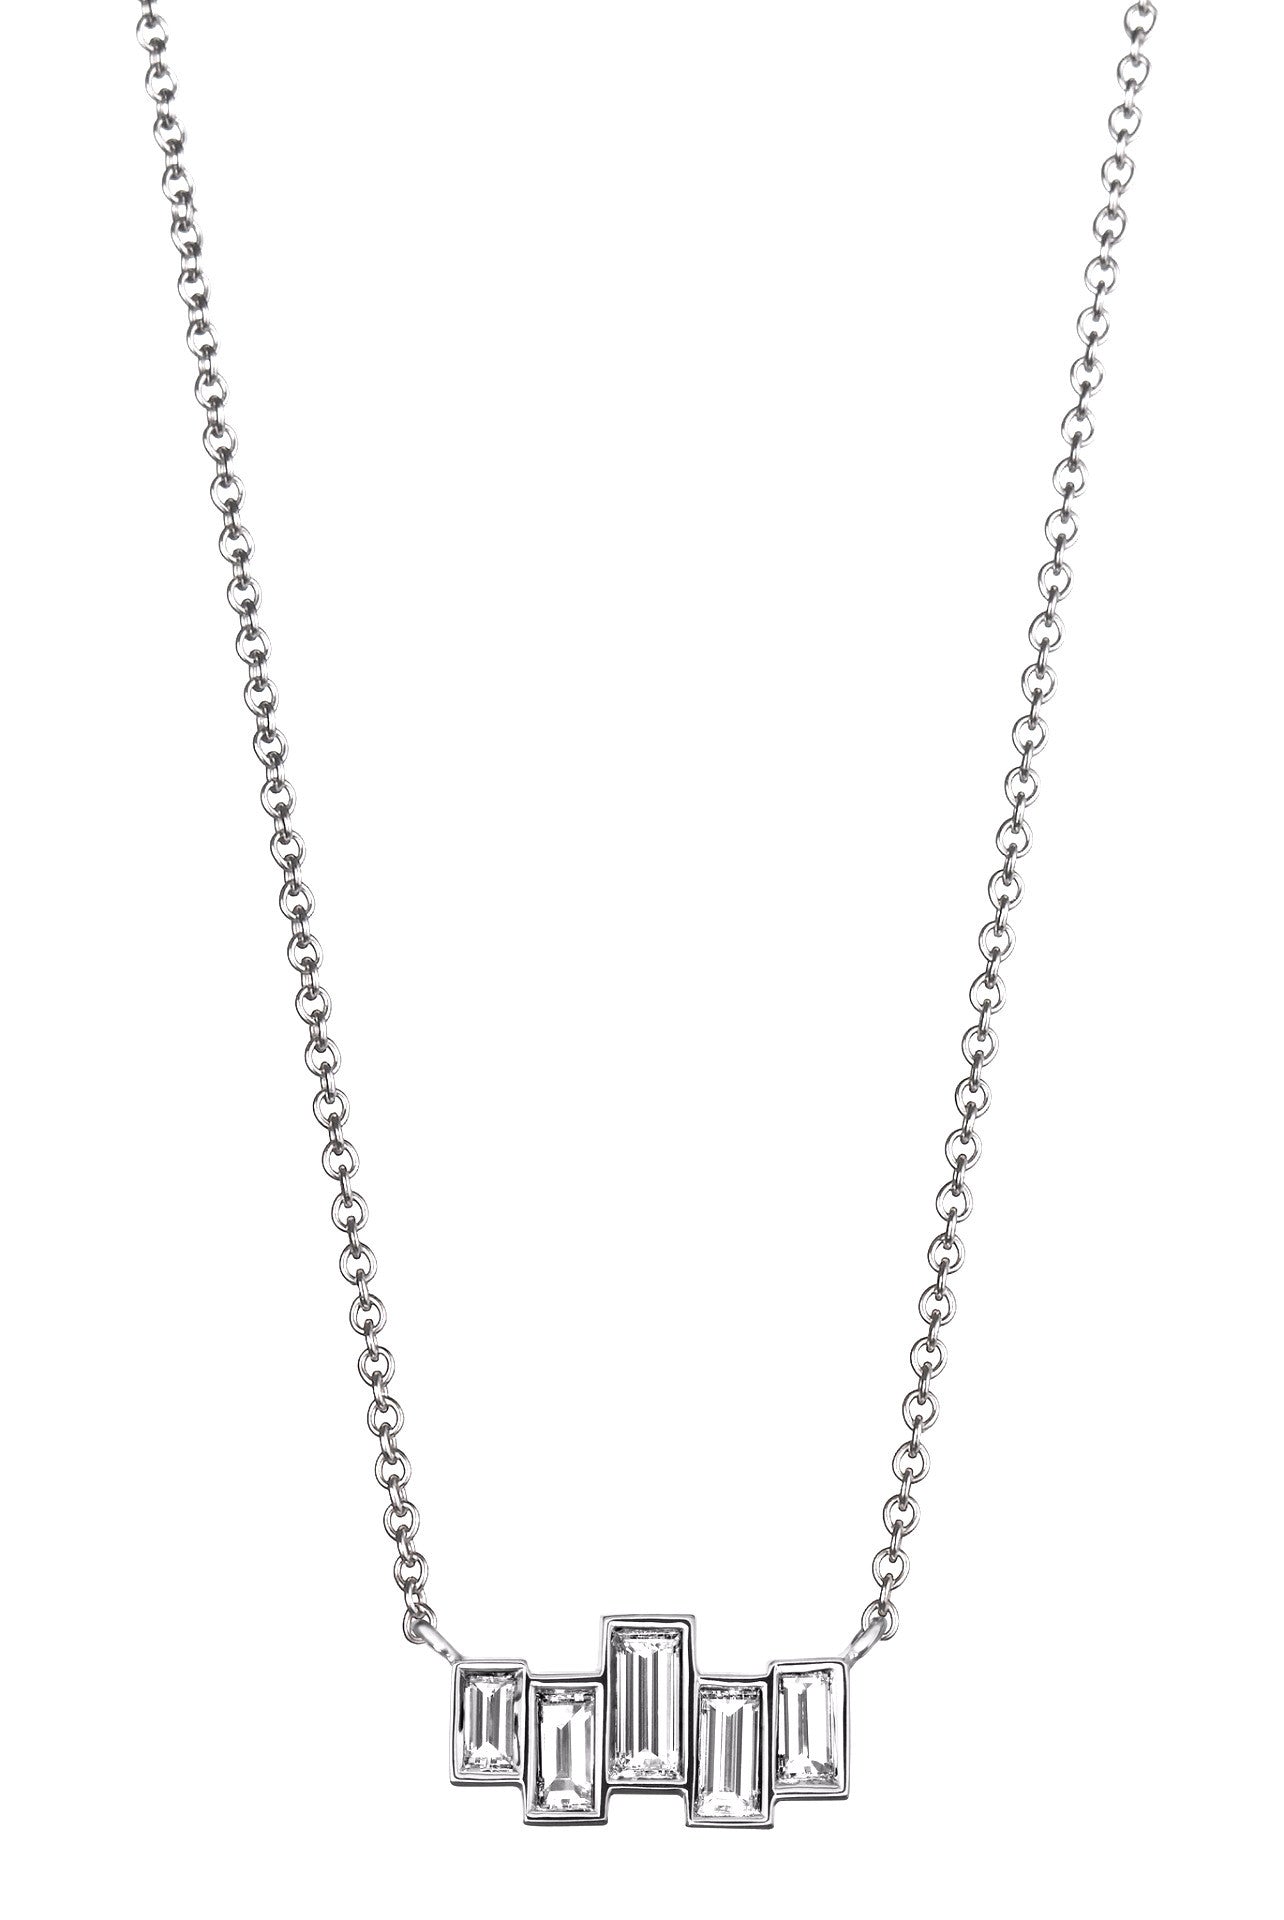 unique .55 carats diamond baguette pendant set on delicate chain by finn by candice pool neistat